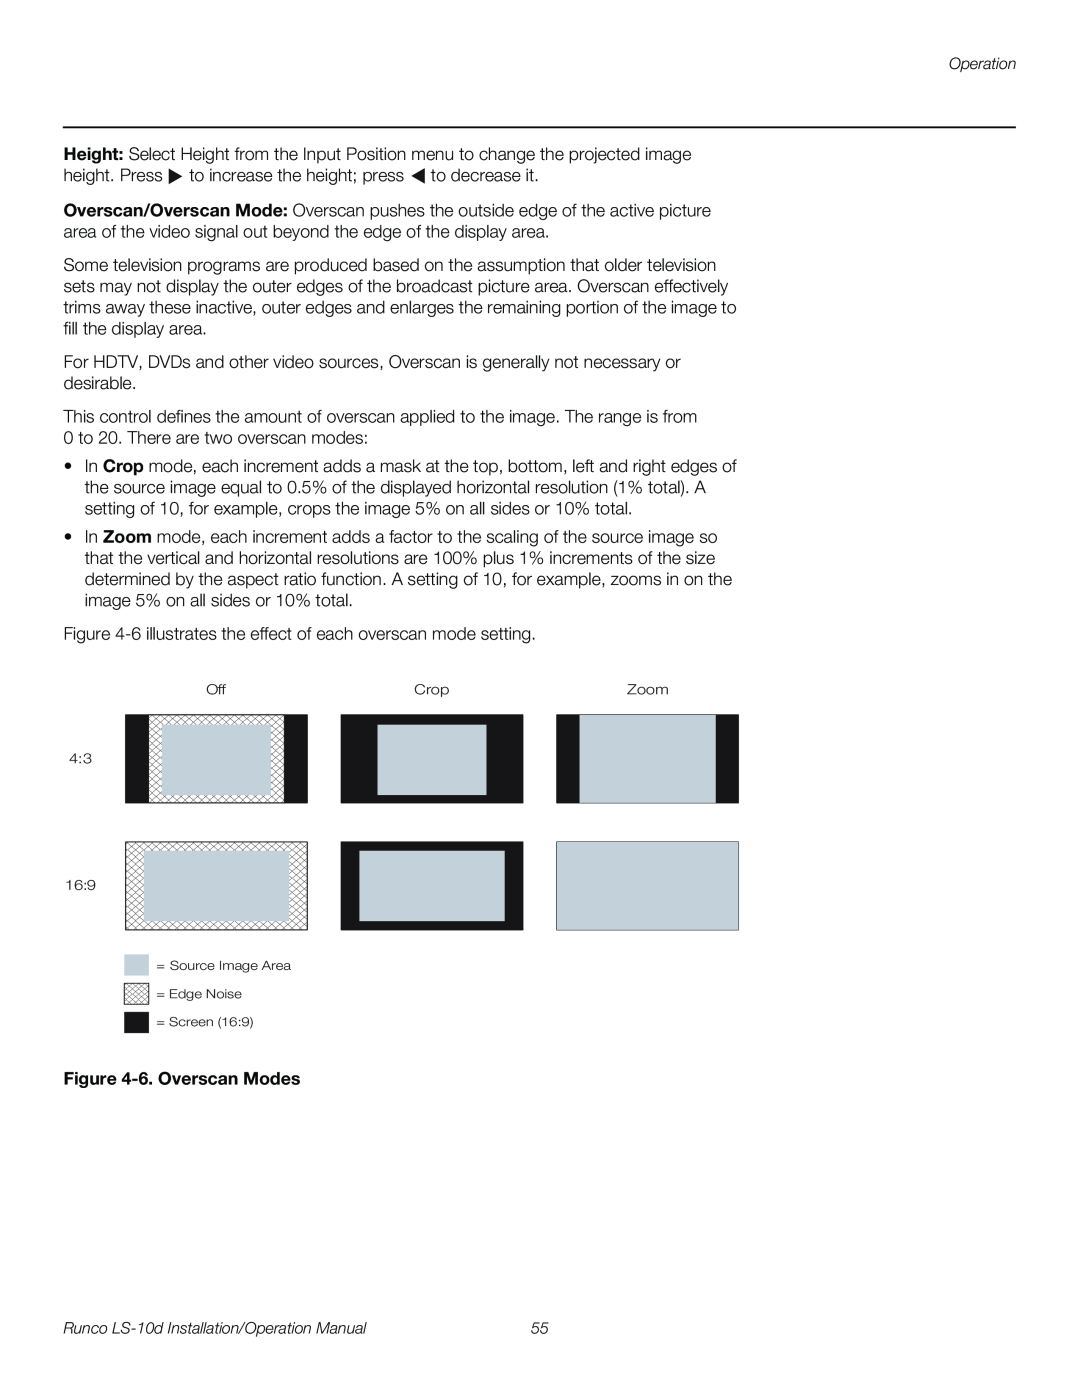 Runco LS-10D operation manual 6. Overscan Modes 